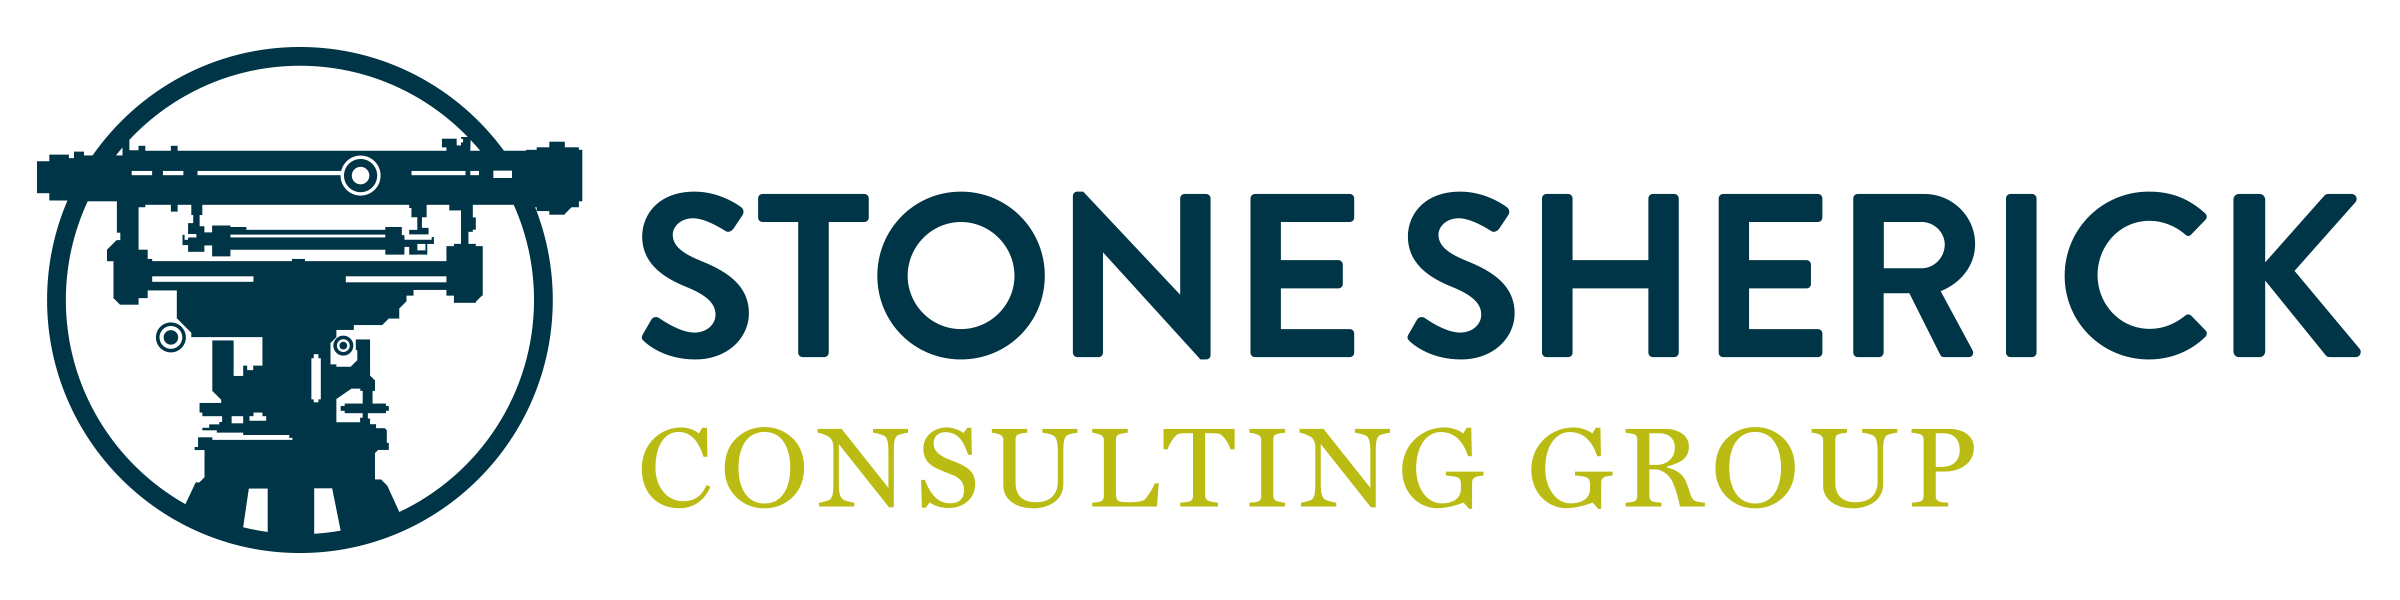 Stone Sherick Consulting Group company logo